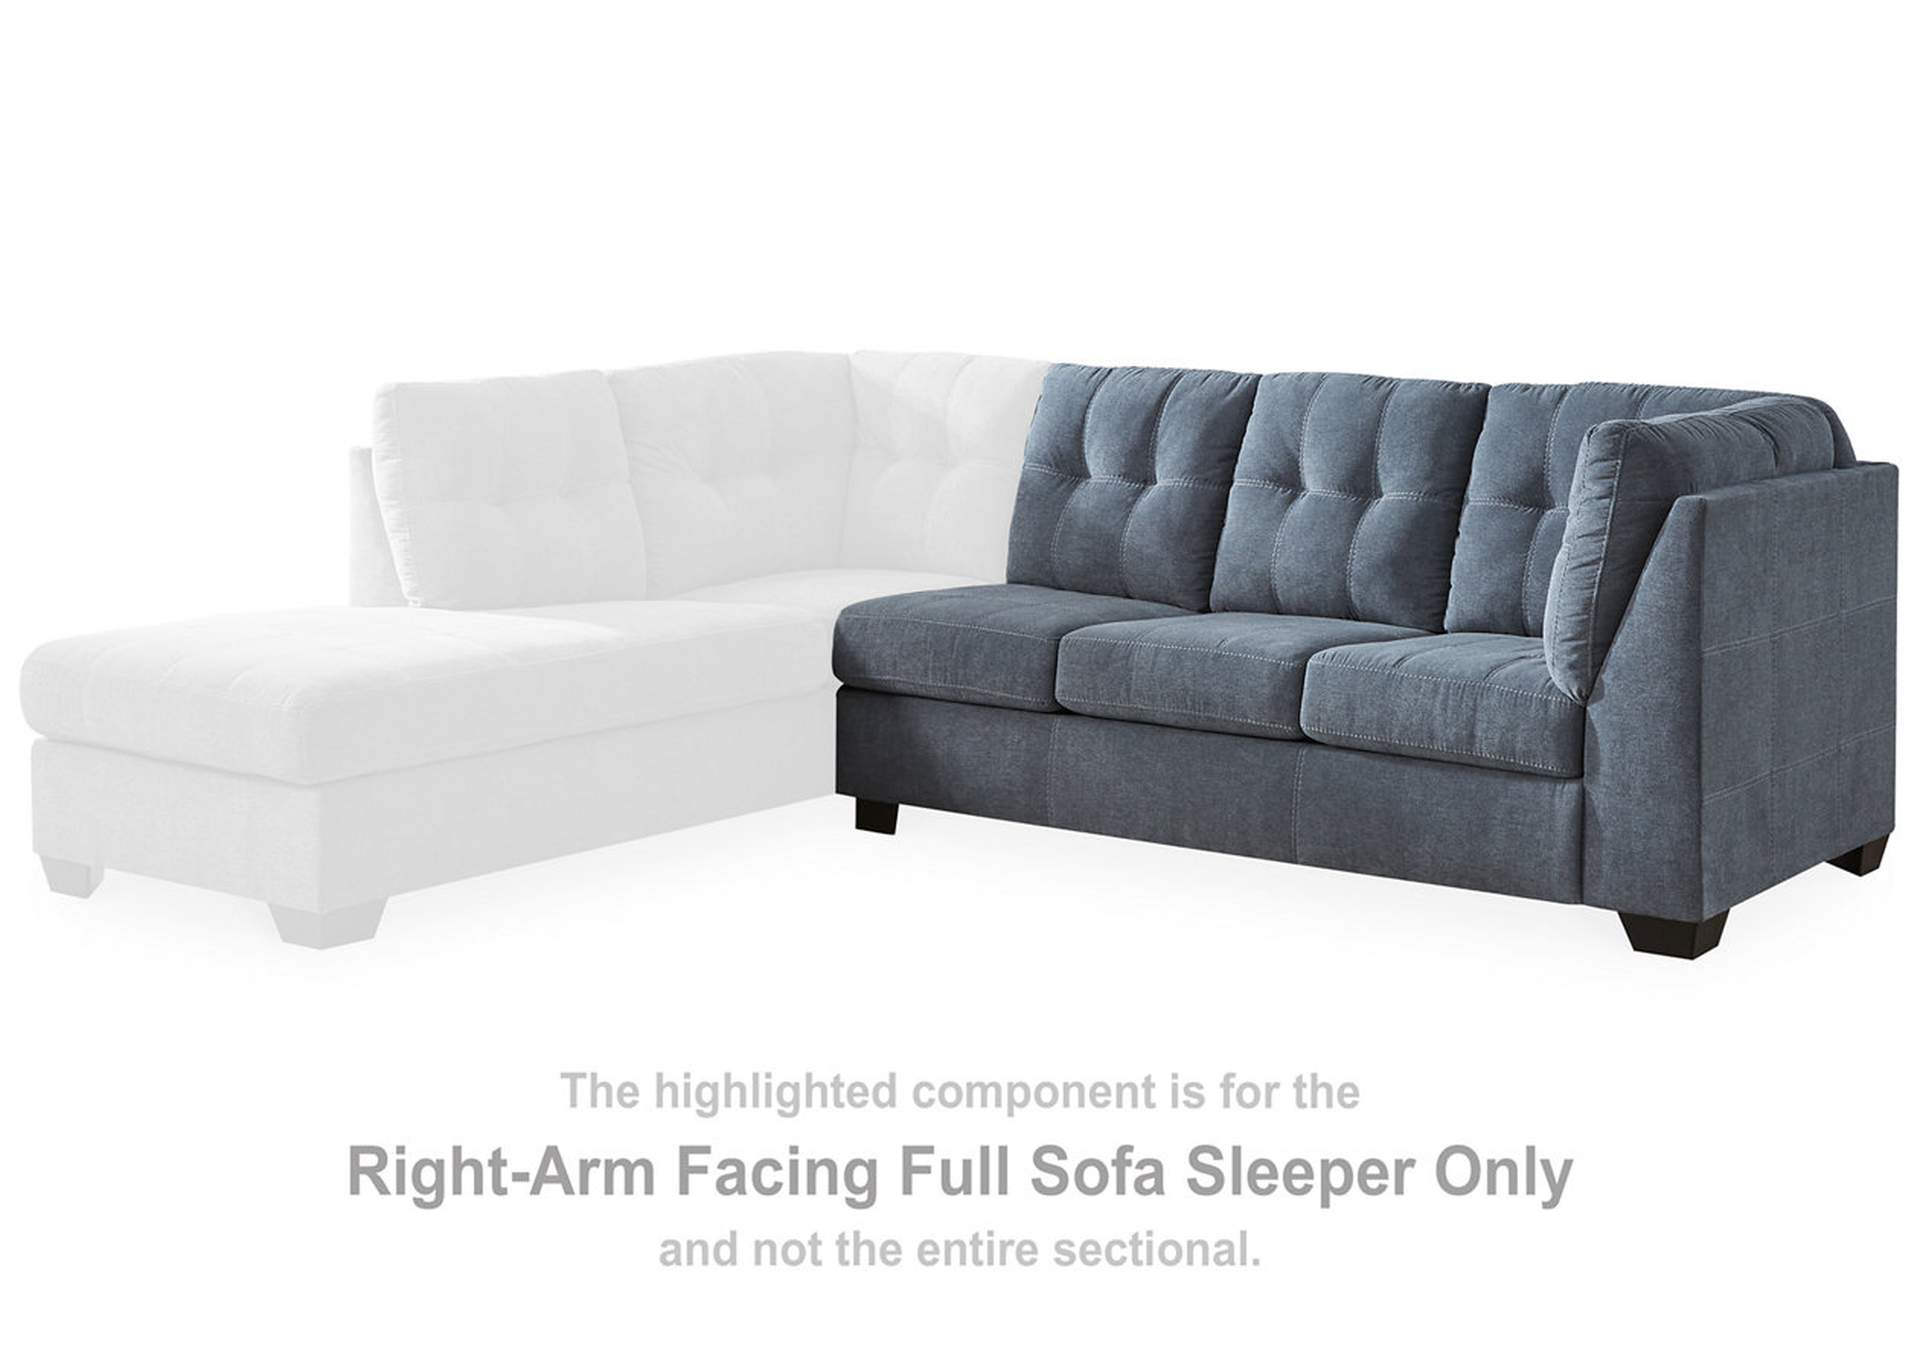 Marleton Right-Arm Facing Full Sofa Sleeper,Signature Design By Ashley